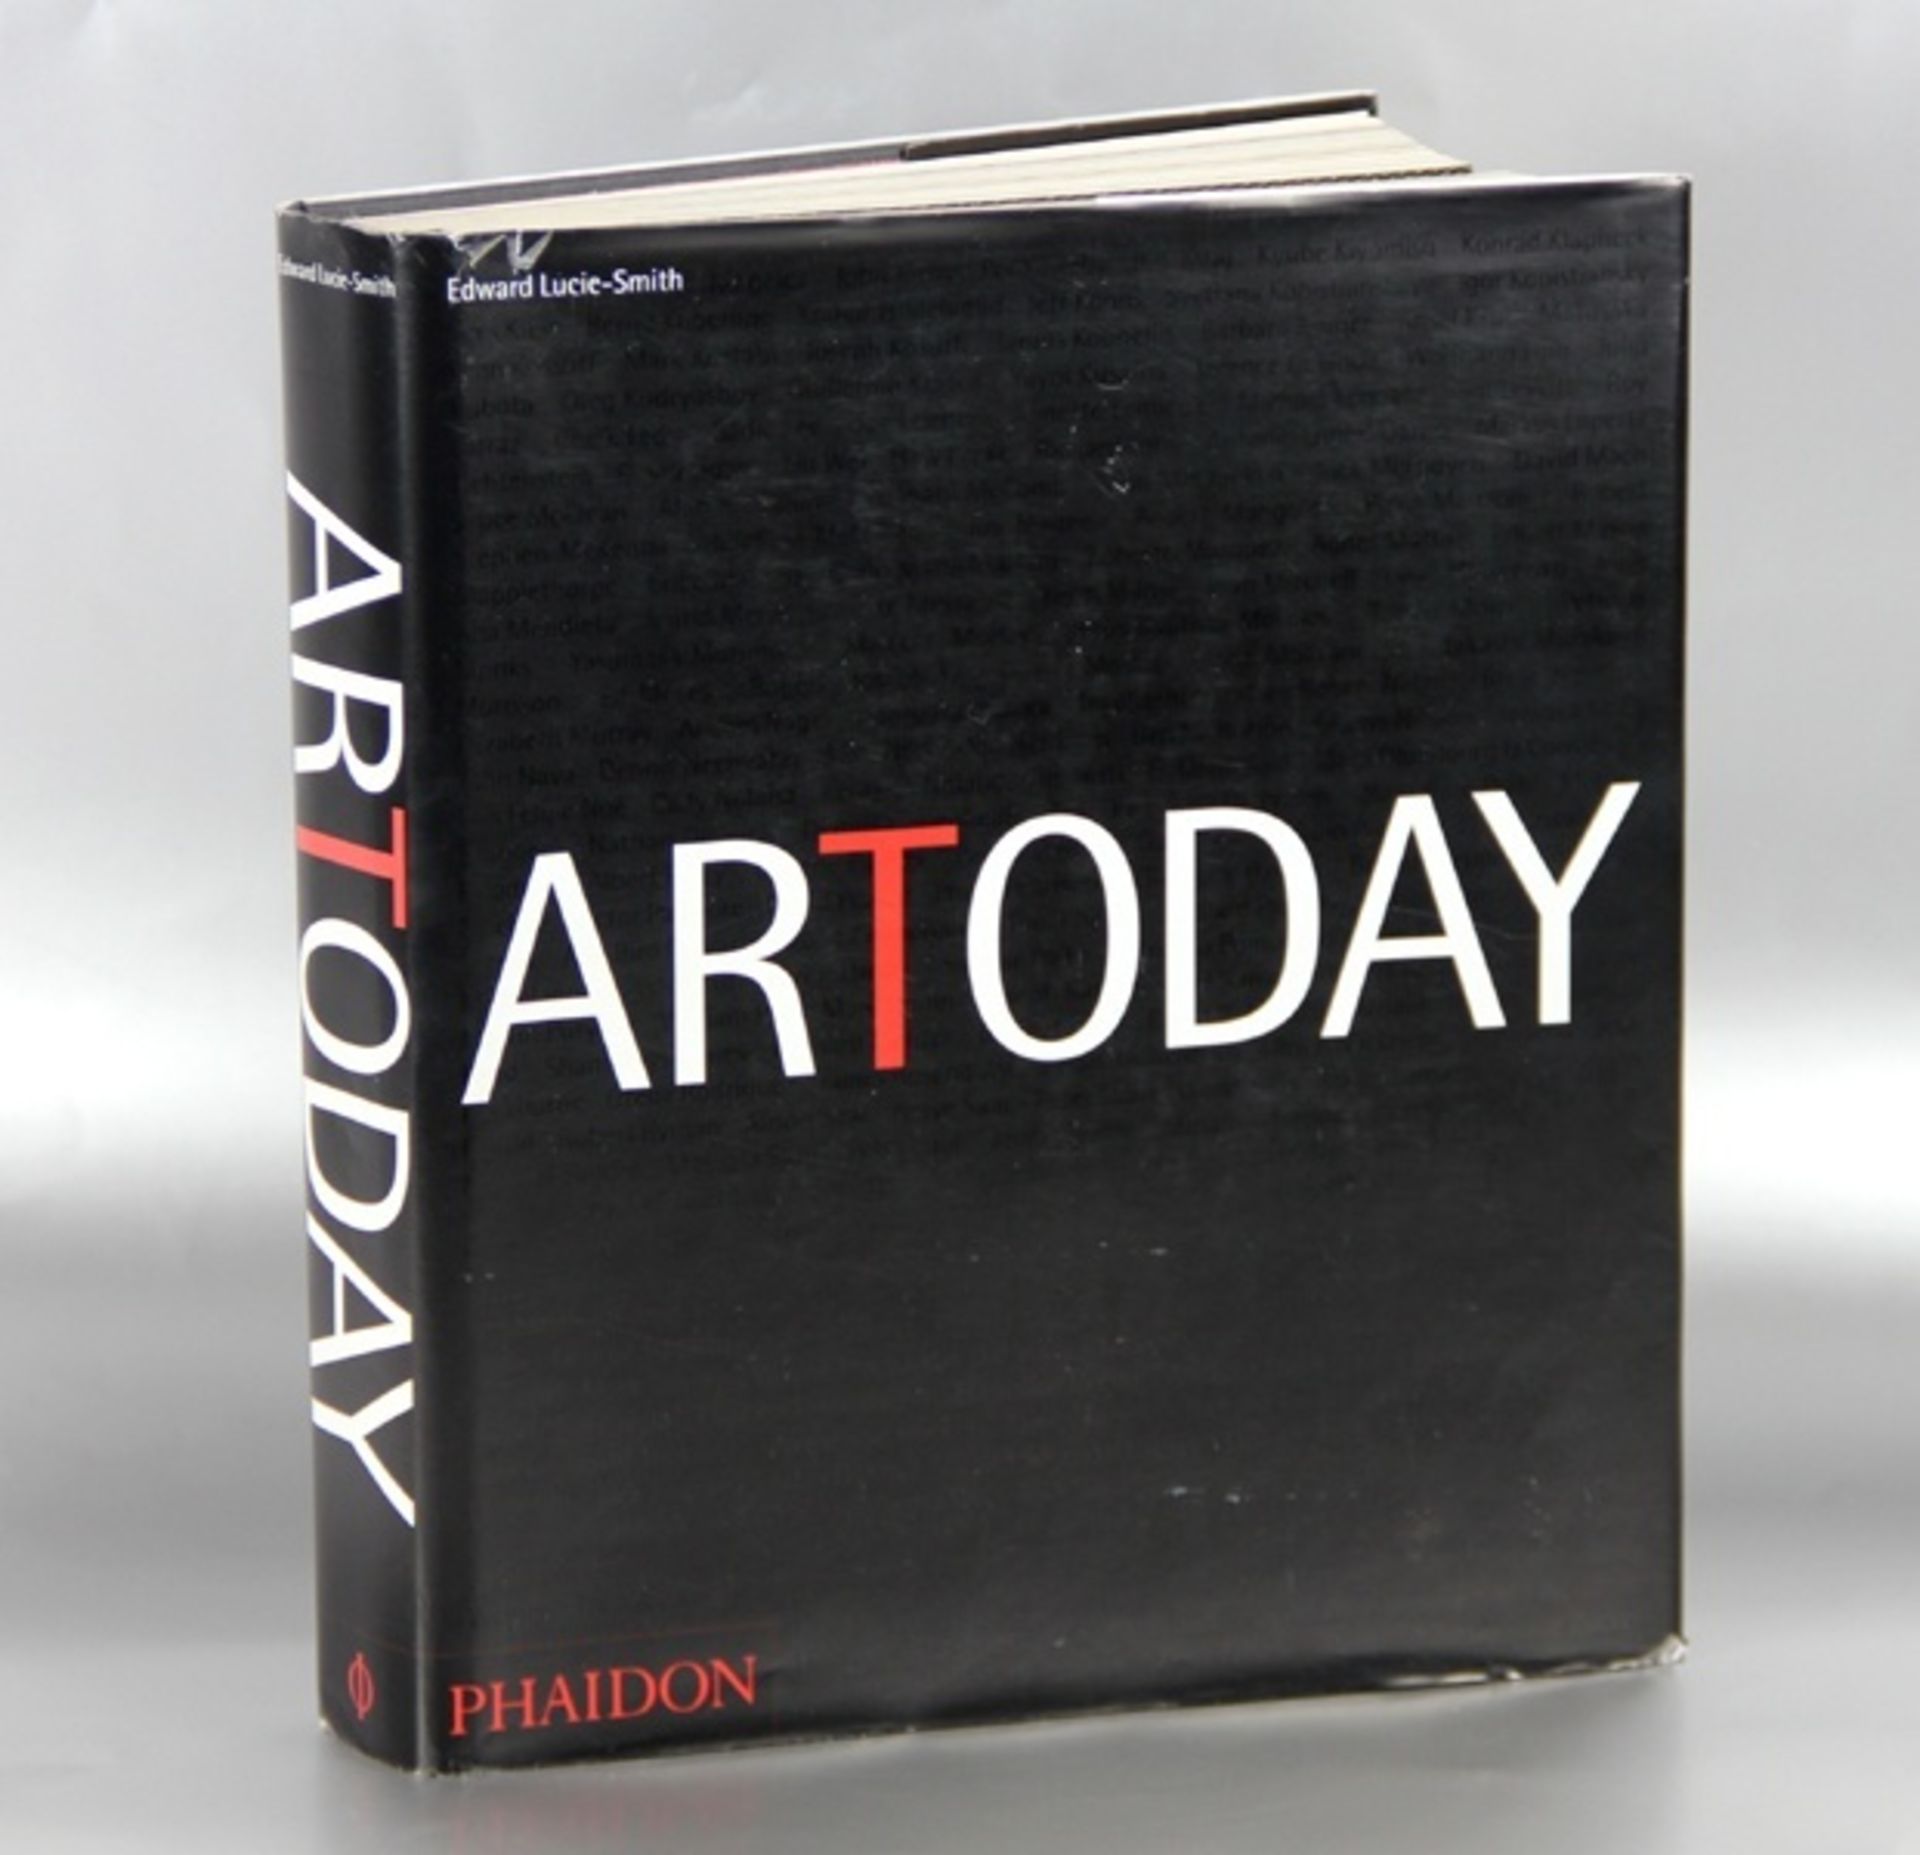 Phaidon-Kunstbuch Art Today1995, Phaidon Press Limited, Art Today von Edward Lucie-Smith,